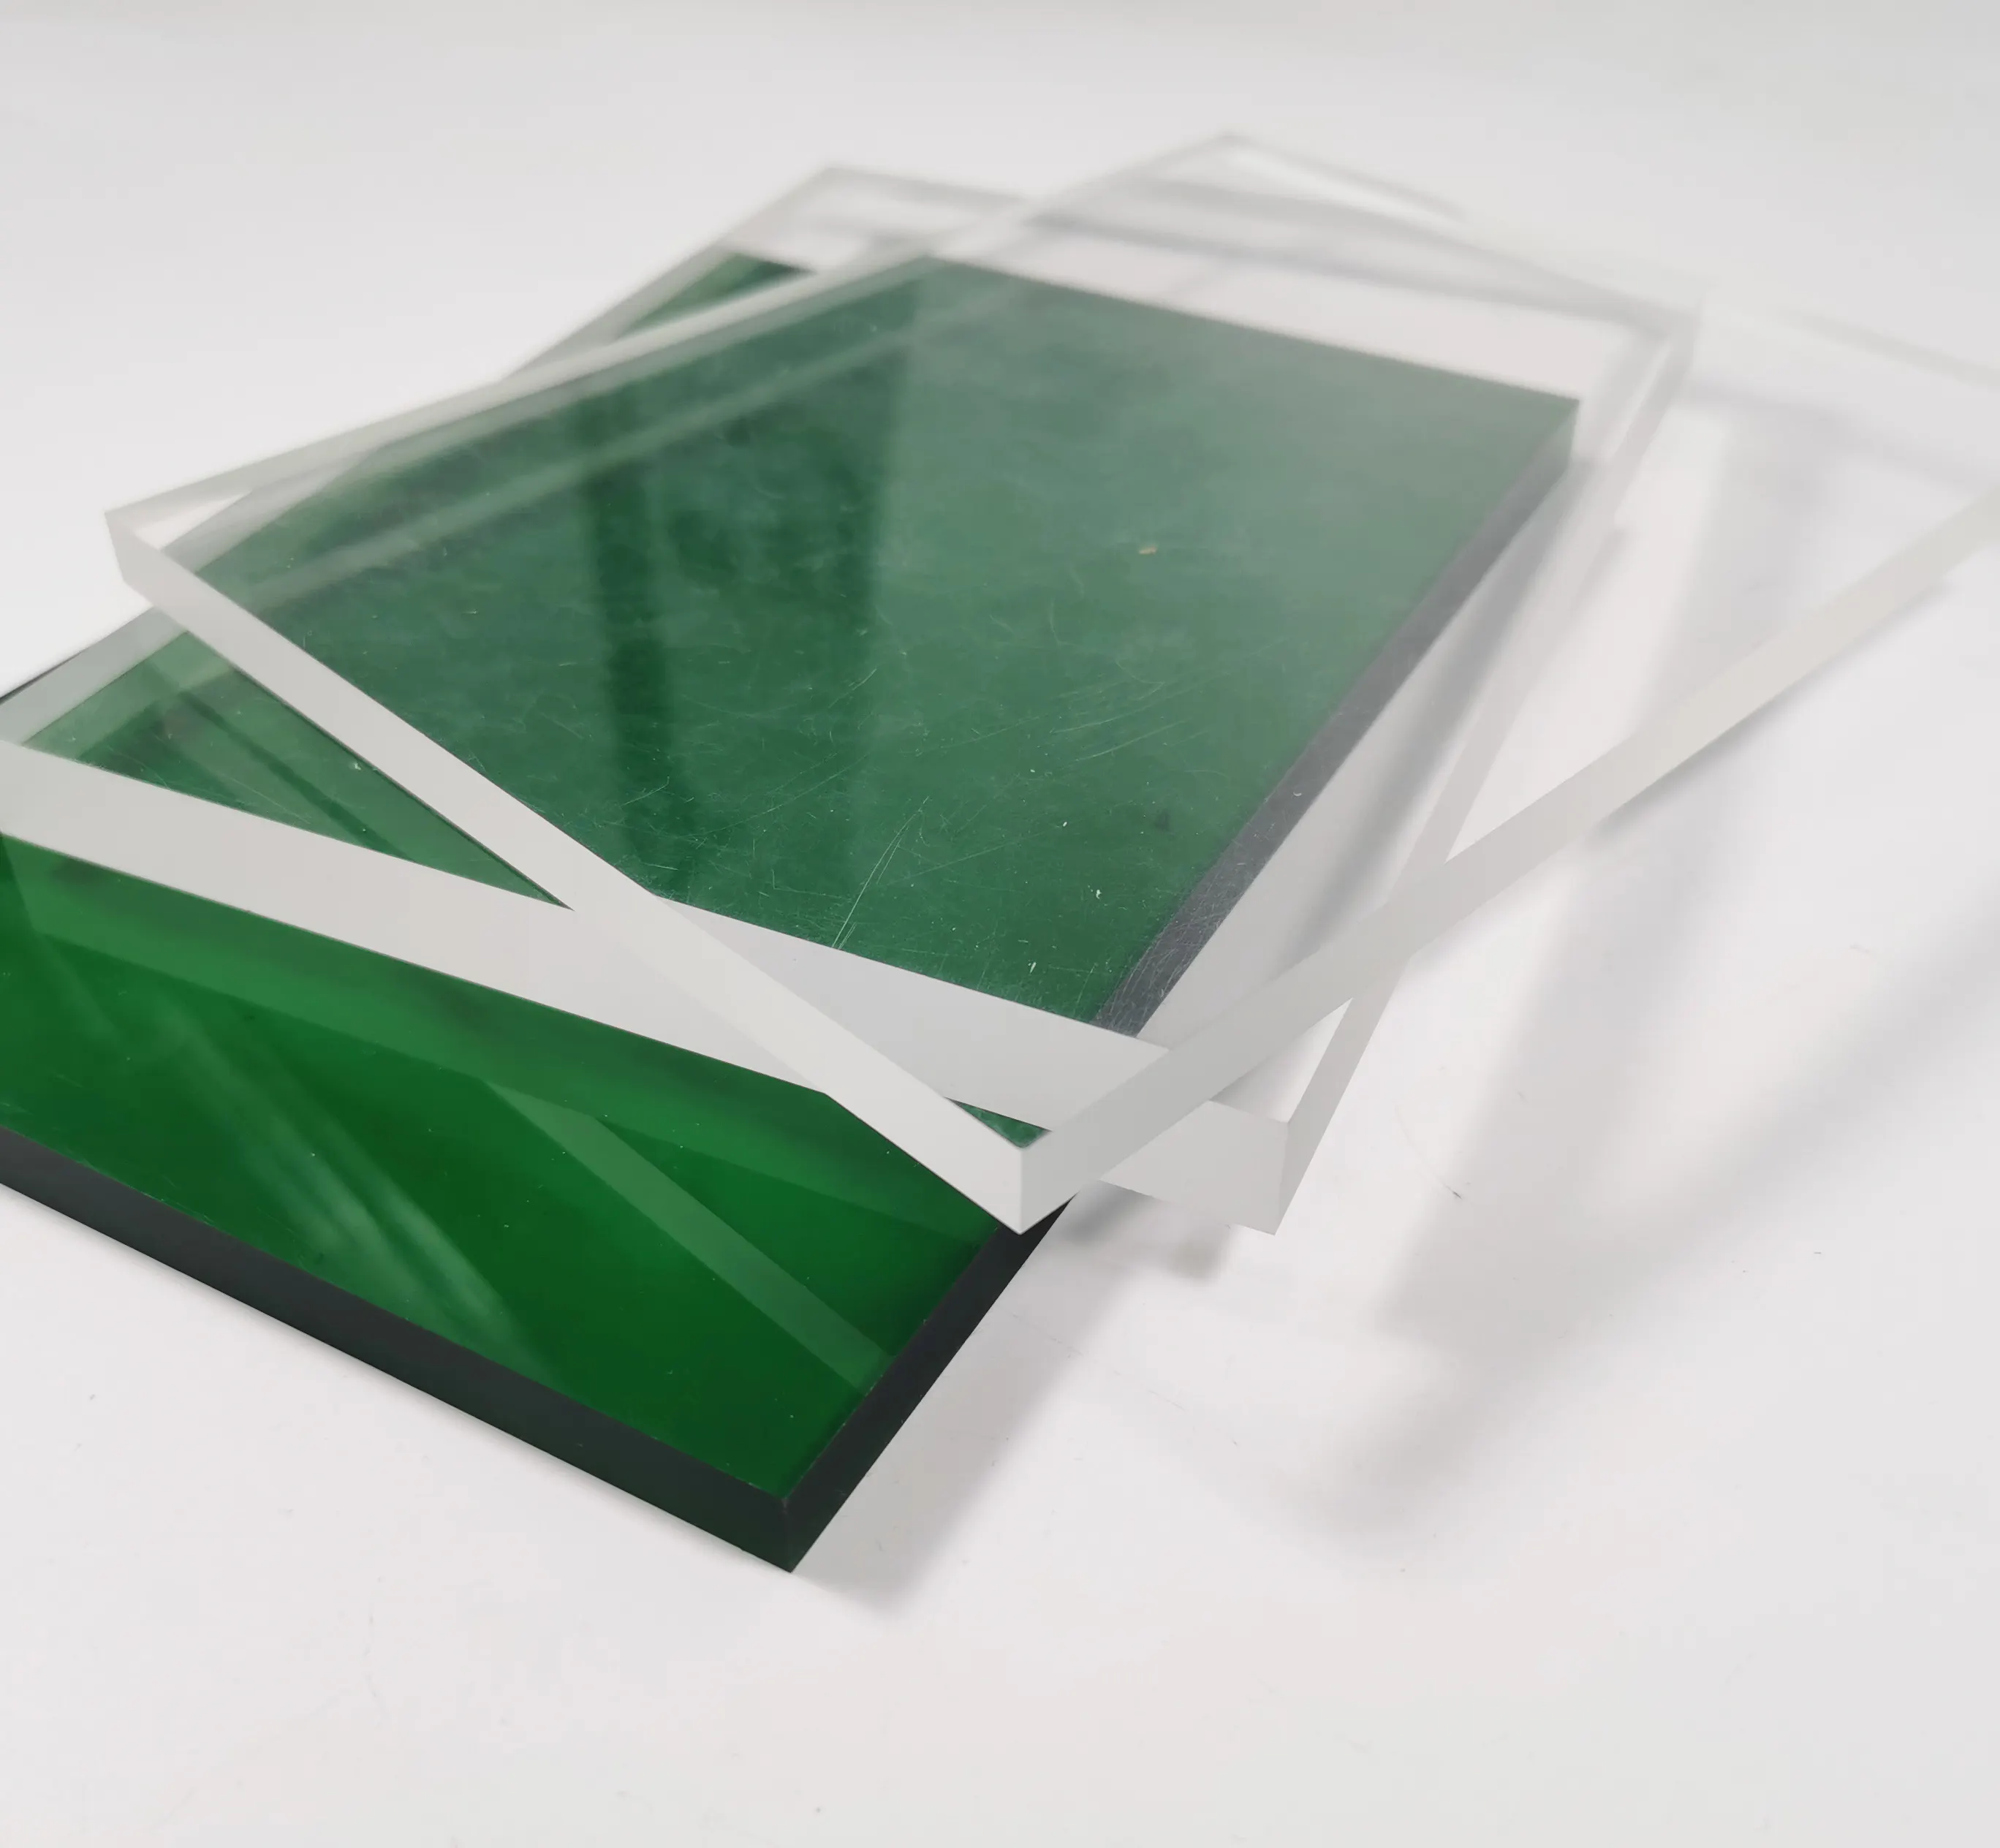 YAGELI factory wholesale high quality 100% new material customized design table acrylic plexiglass acrylic sheet